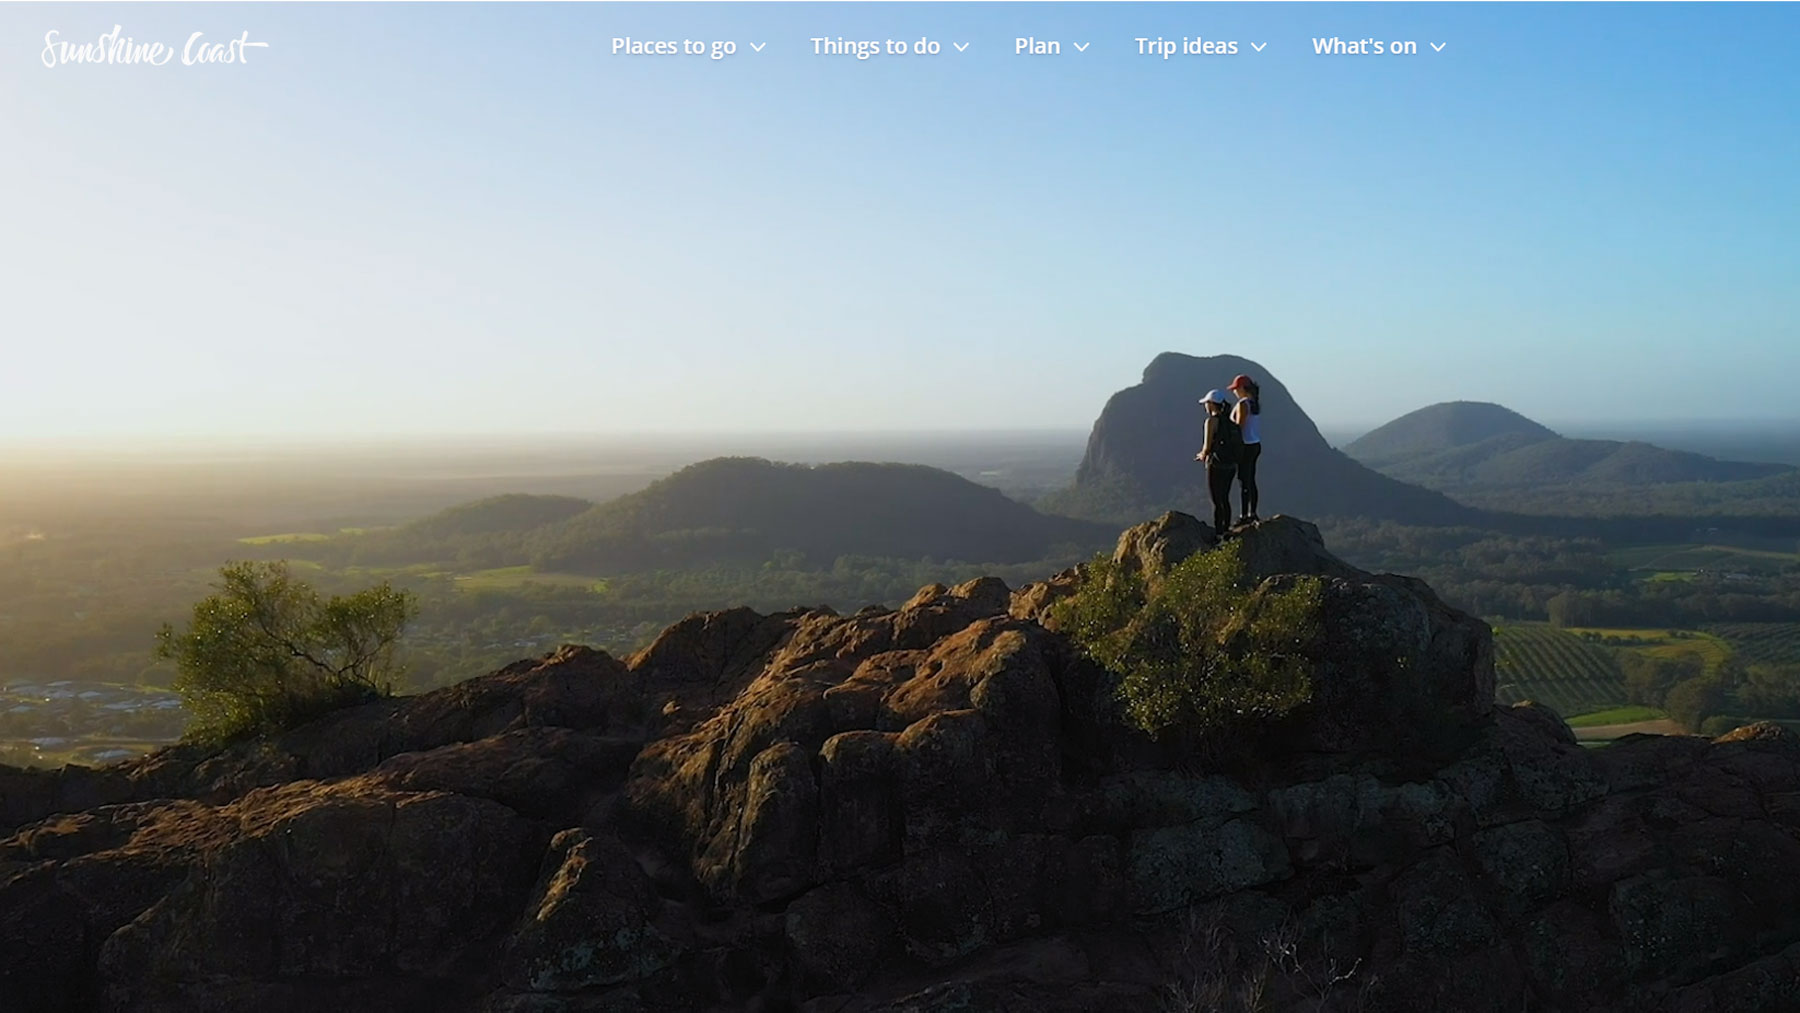 New website delivers Sunshine Coast travel inspiration at lightning speed